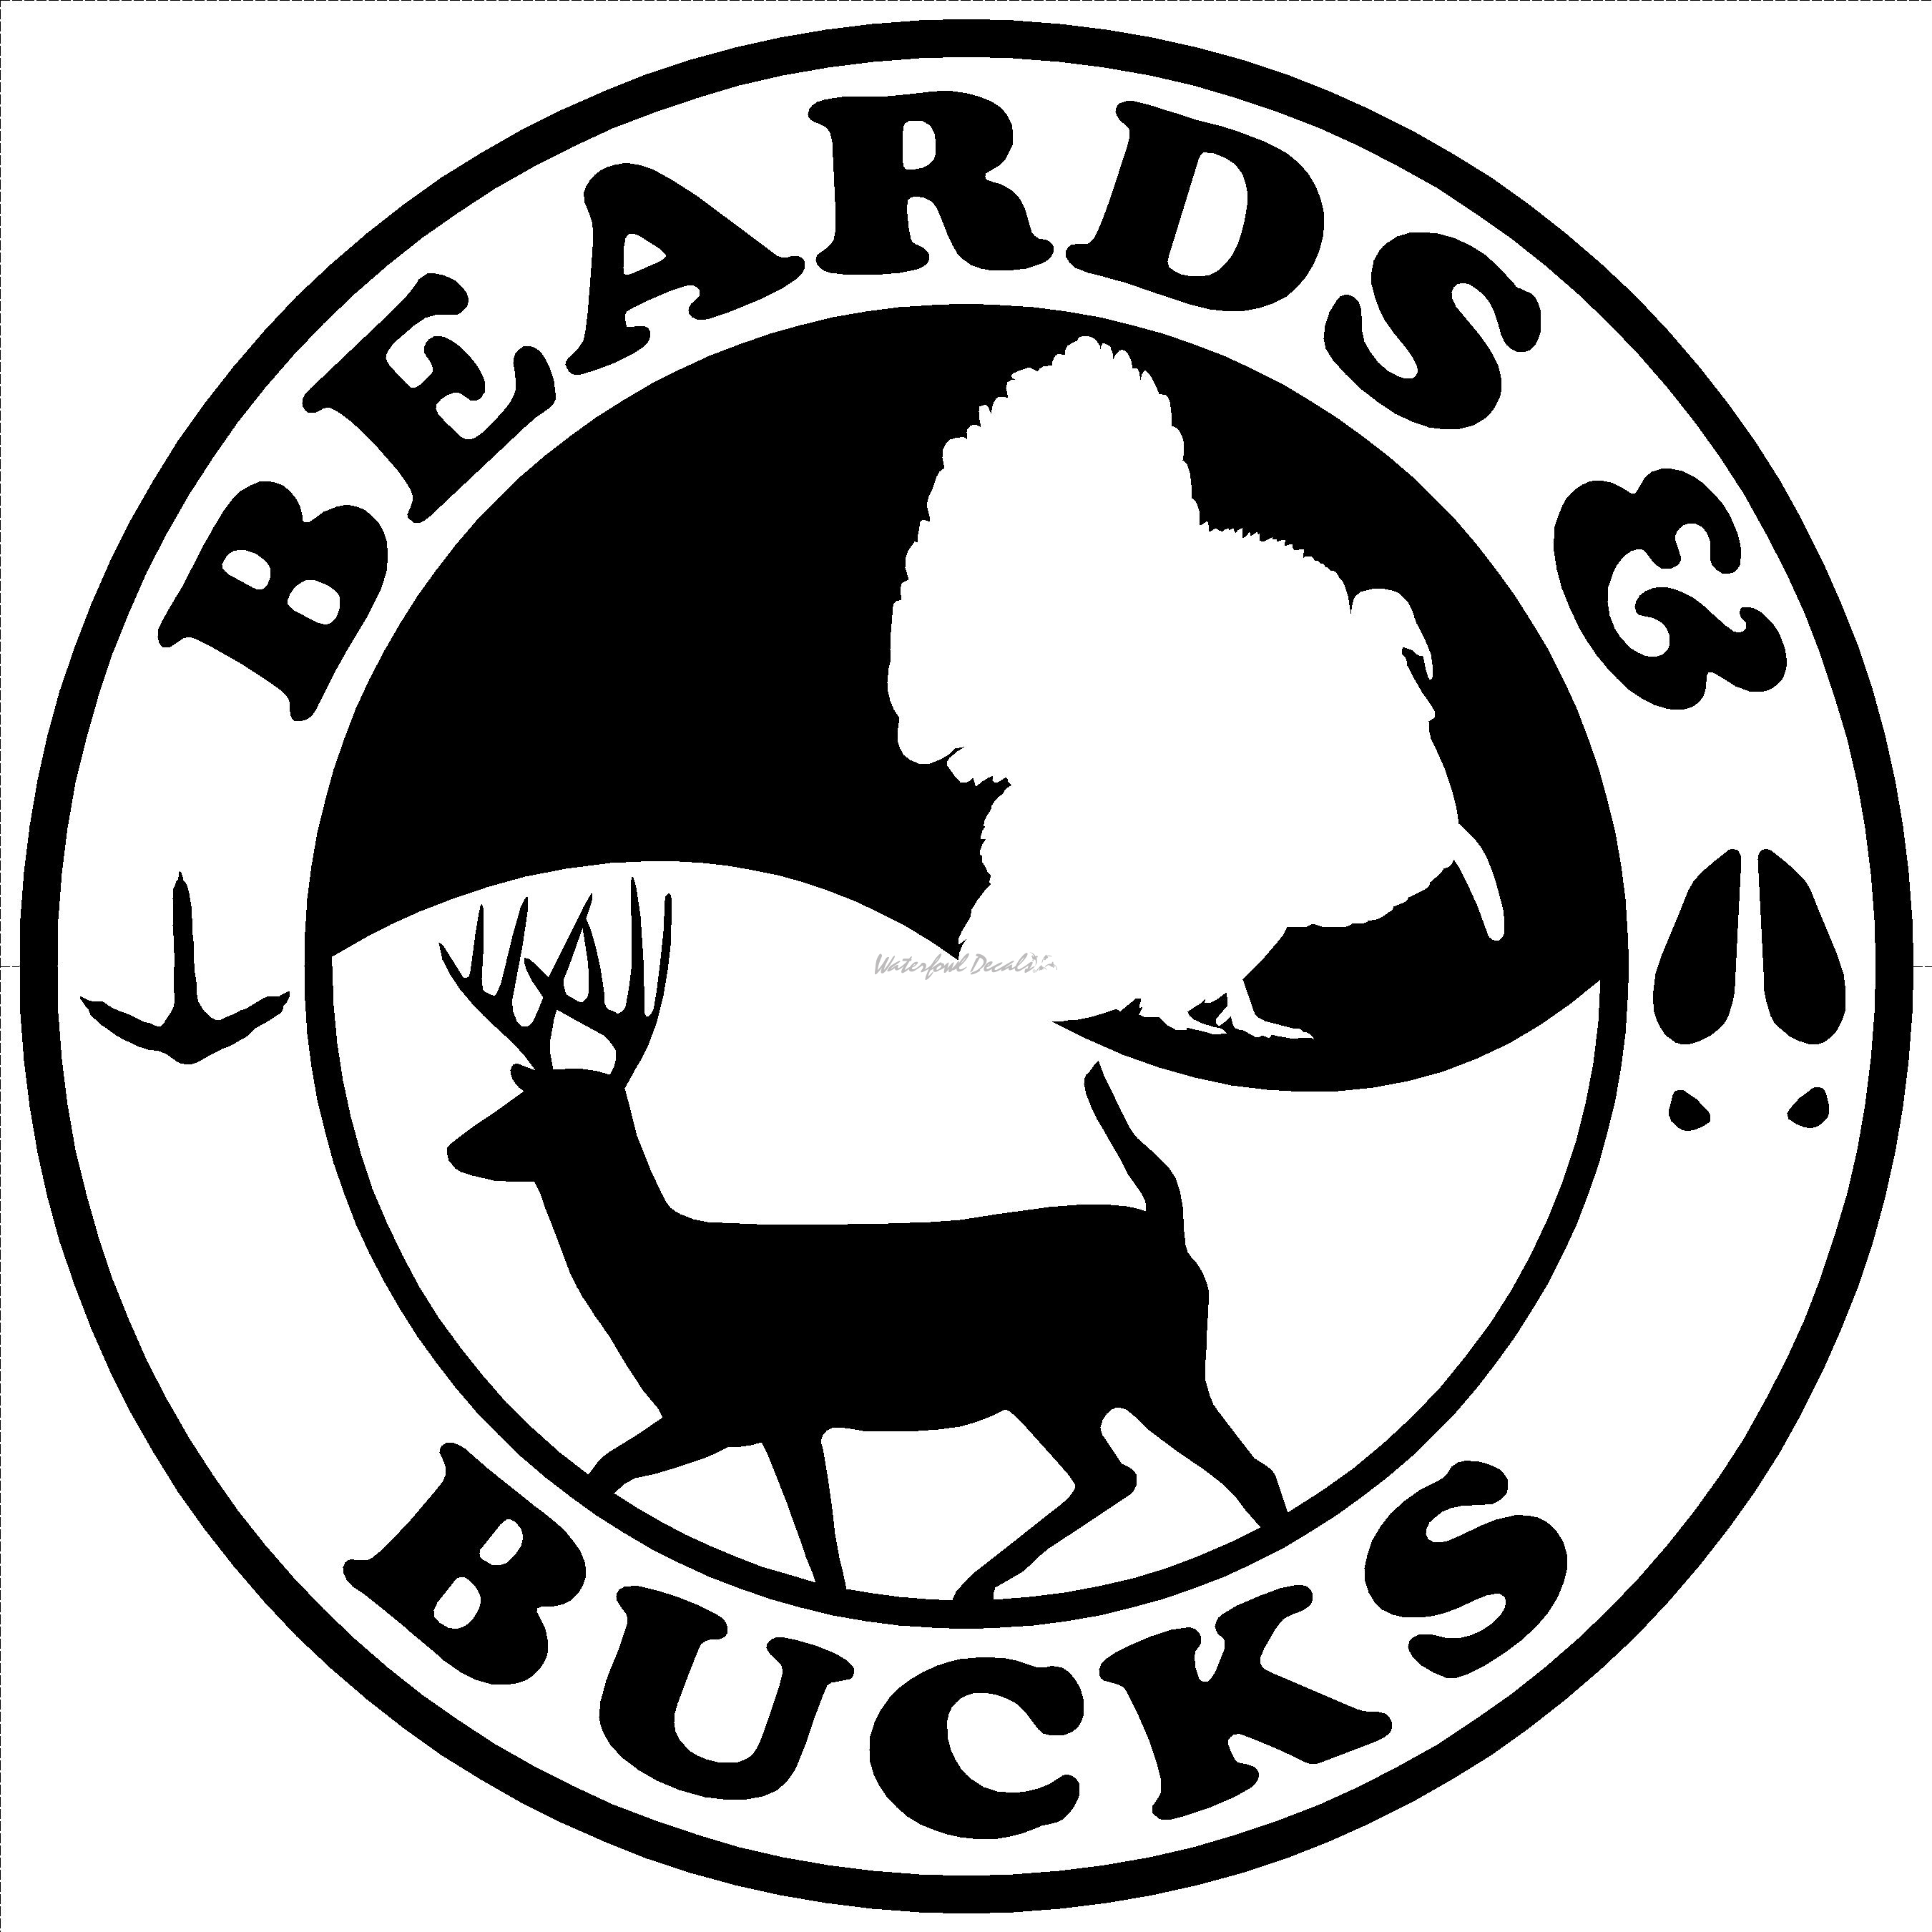 Download Beards & Bucks - Turkey and Deer Decal